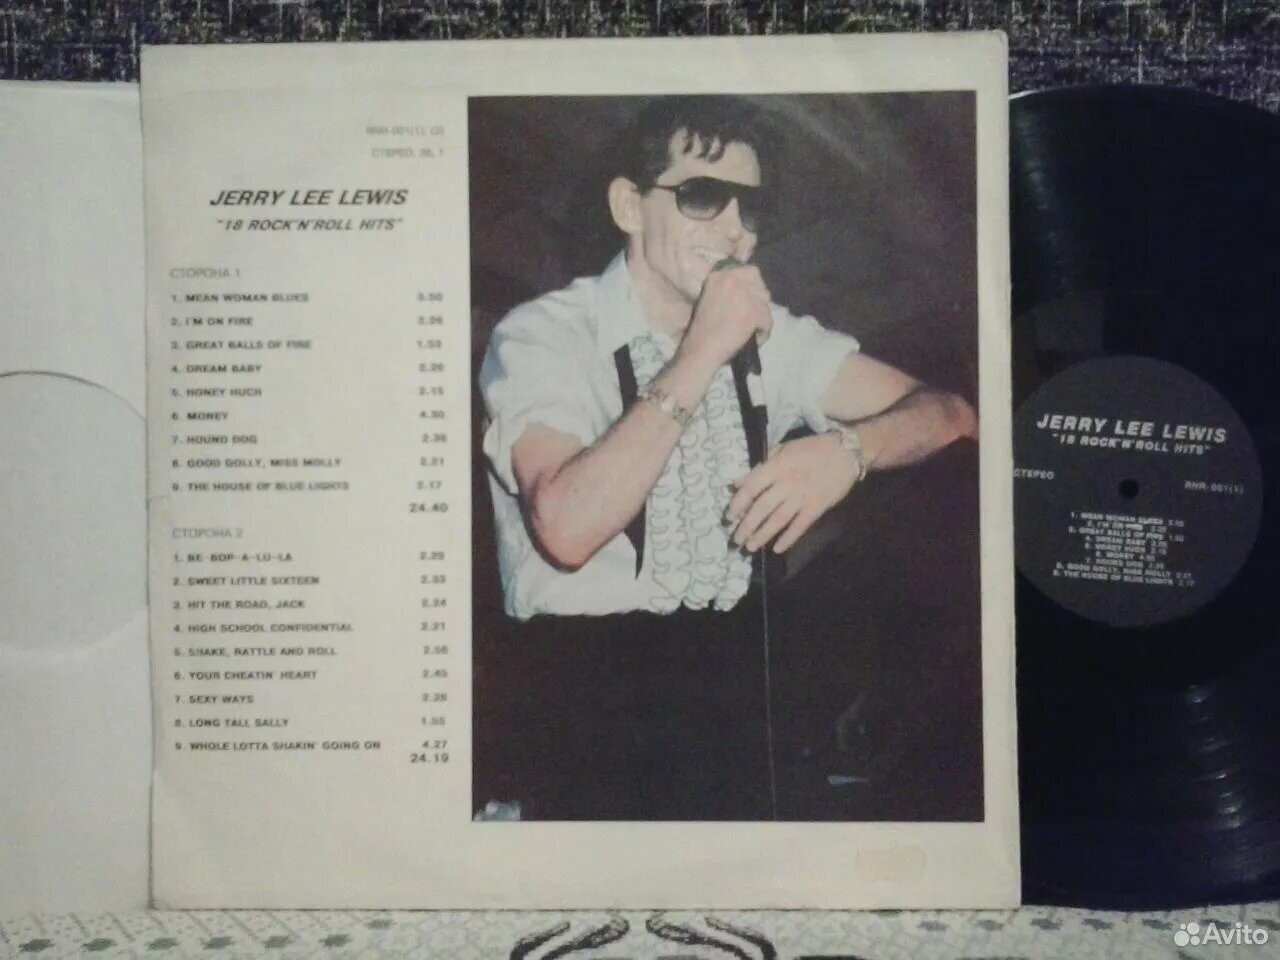 Jerry Lee Lewis — 18 Rock'n'Roll Hits